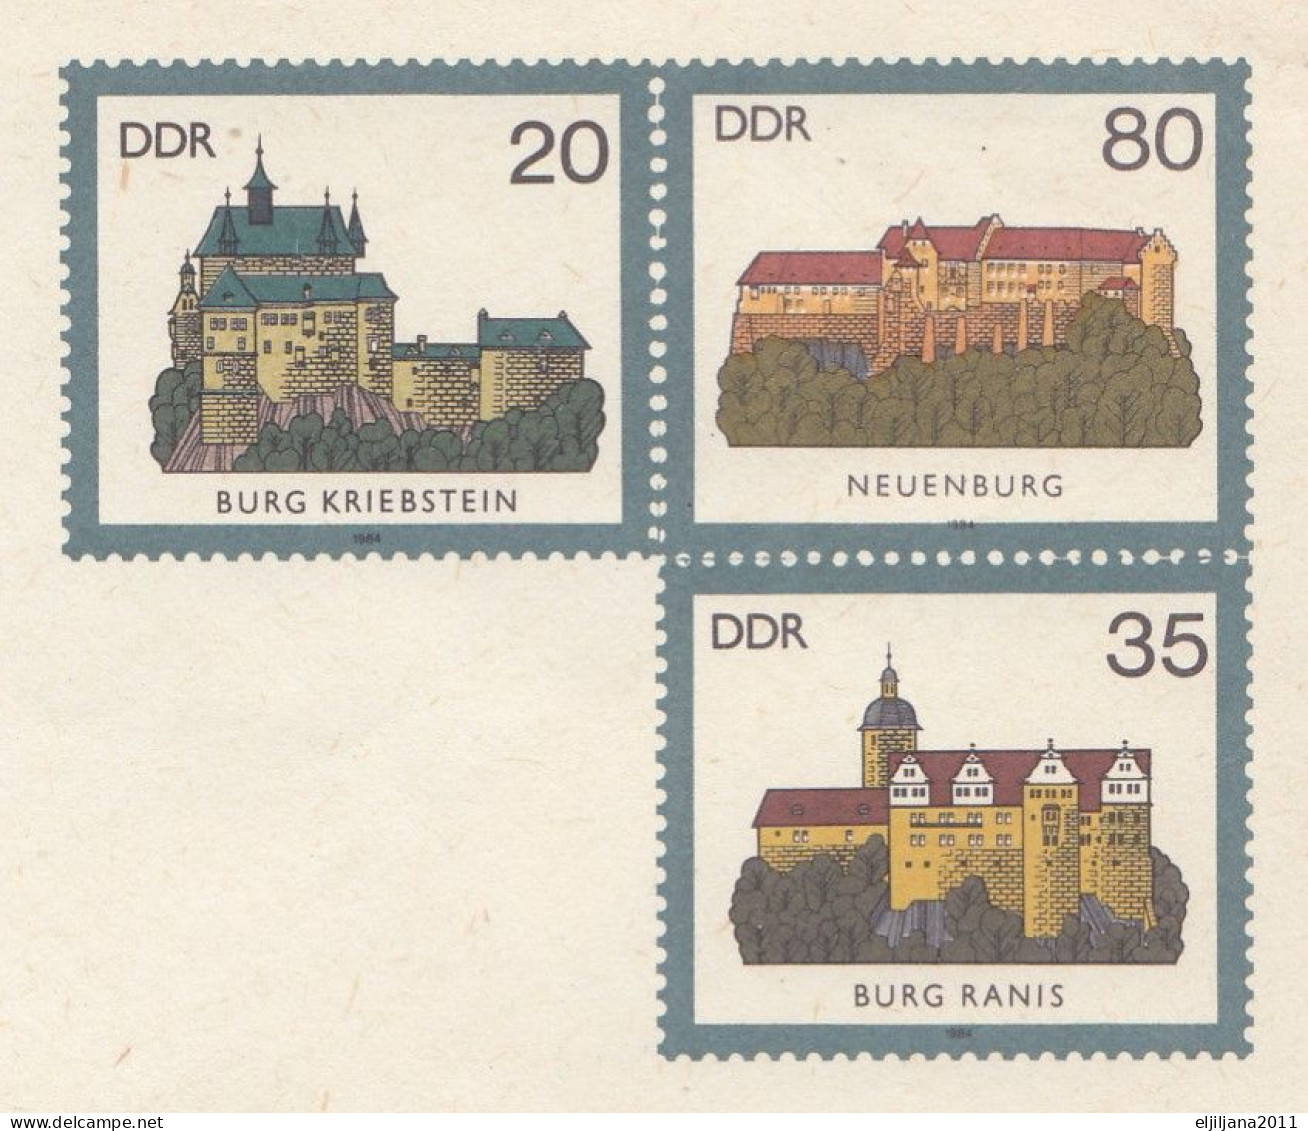 ⁕ Germany DDR 1984 ⁕ "Burgen Der DDR" / Postal Stationery ⁕ 3v Unused Cover FDC Ausgabetag / WERMSDORF - Briefomslagen - Ongebruikt